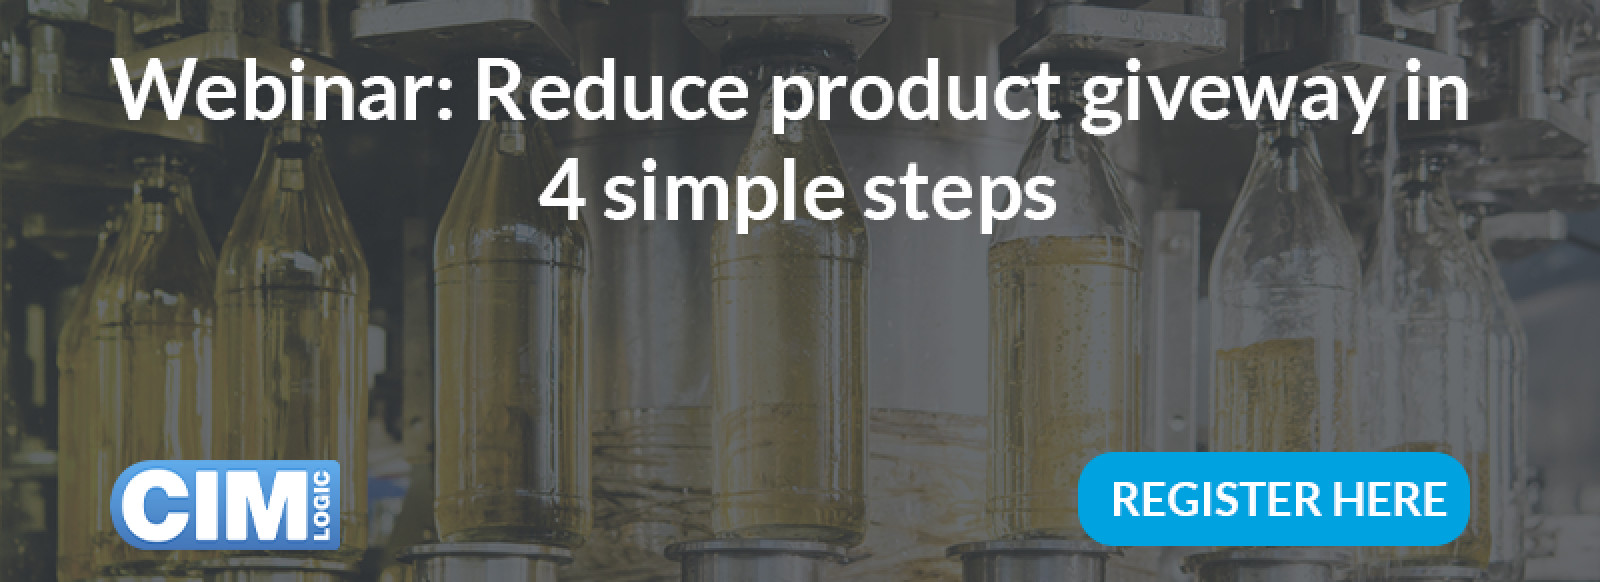 Webinar: Reduce product giveaway in 4 simple steps...